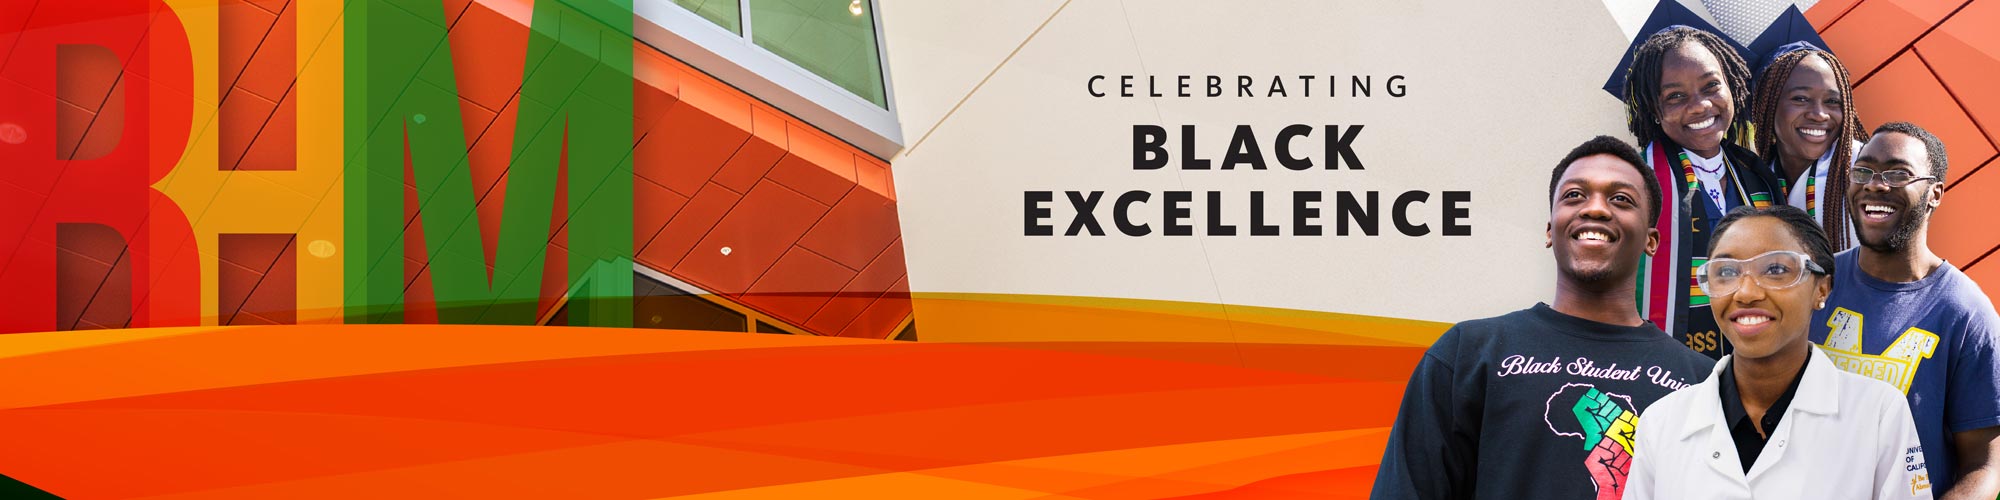 celebrating black excellence